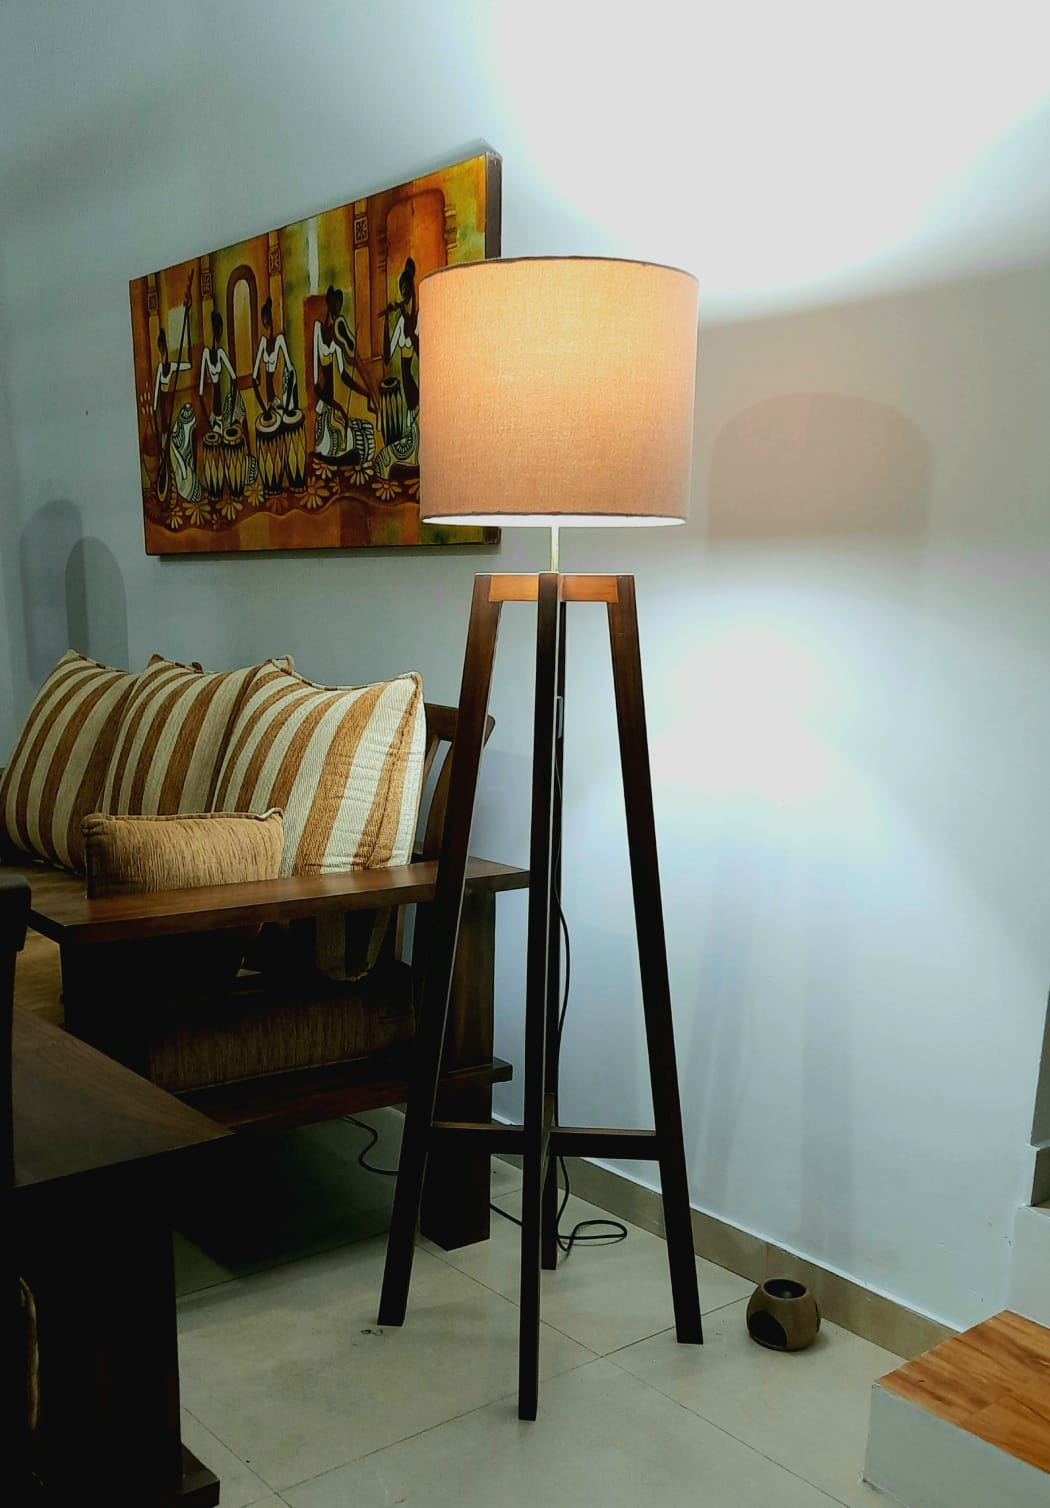 Stand Lamp / Floor Lamp